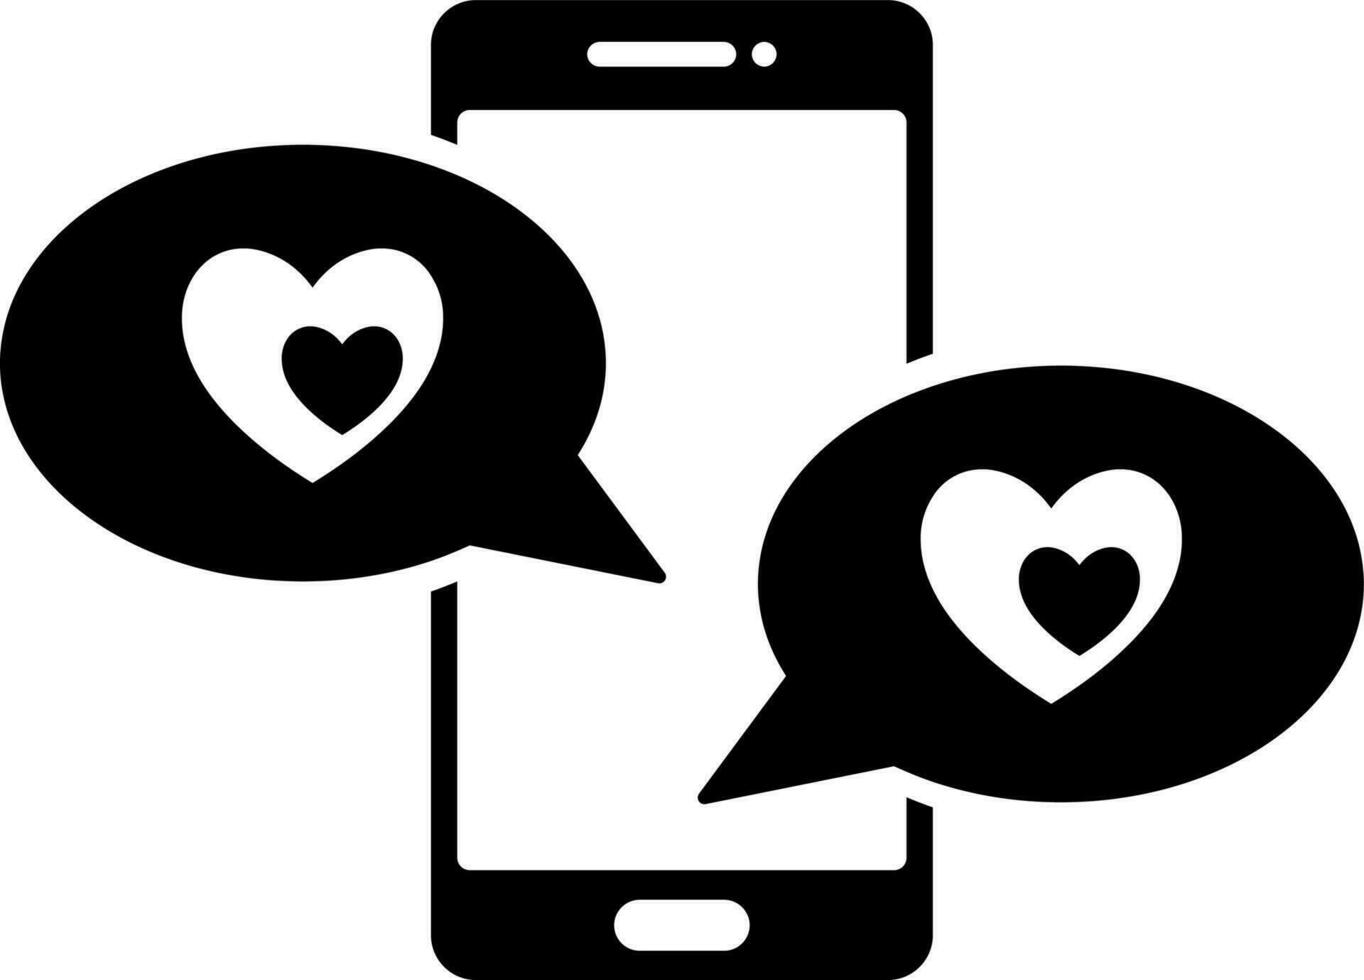 amor mensaje o chateando desde teléfono inteligente icono. vector